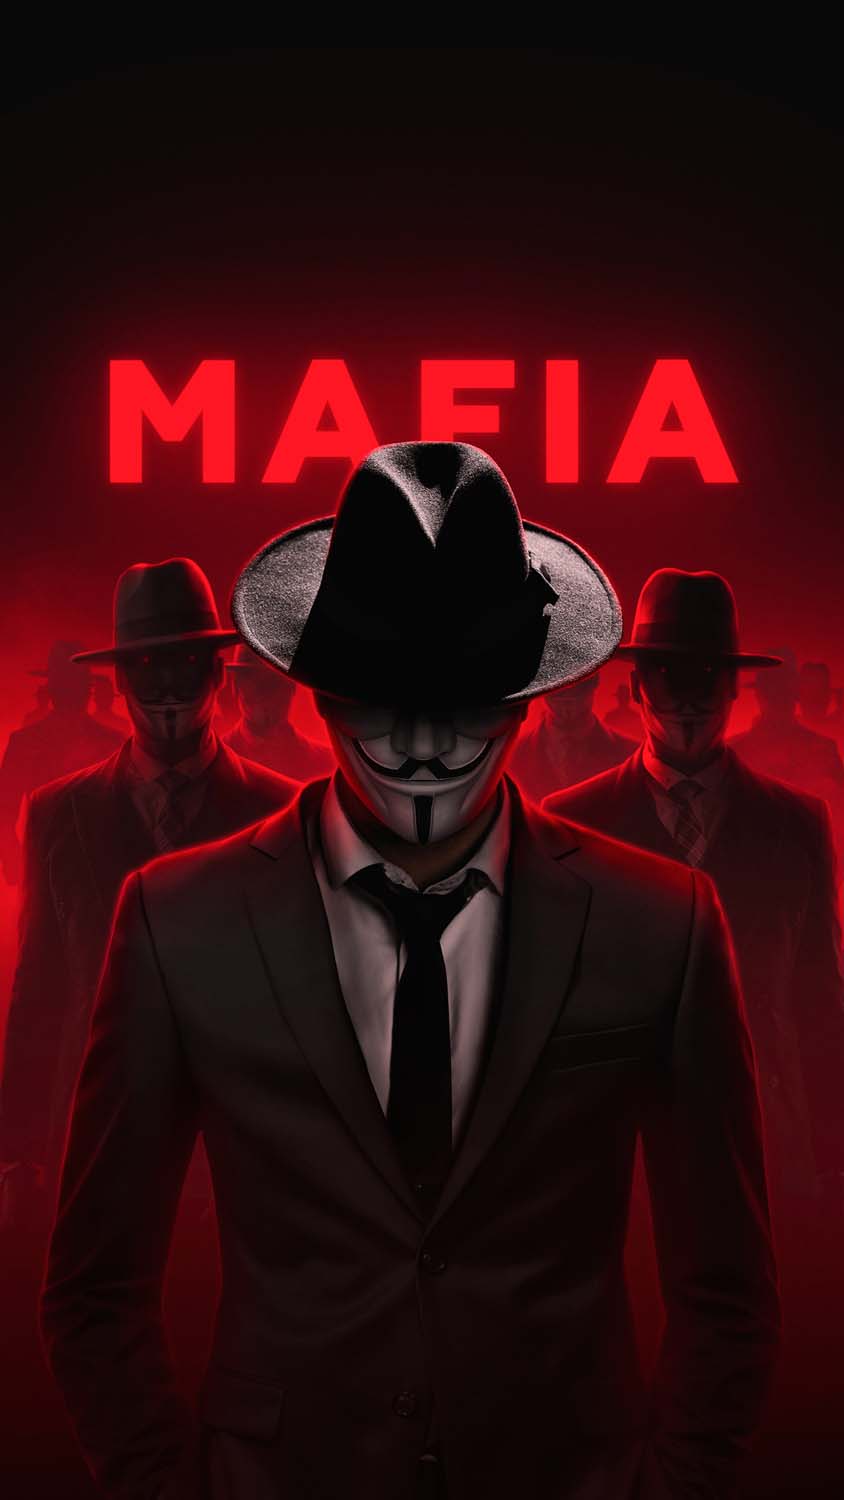 Mafia Gang iPhone Wallpaper HD